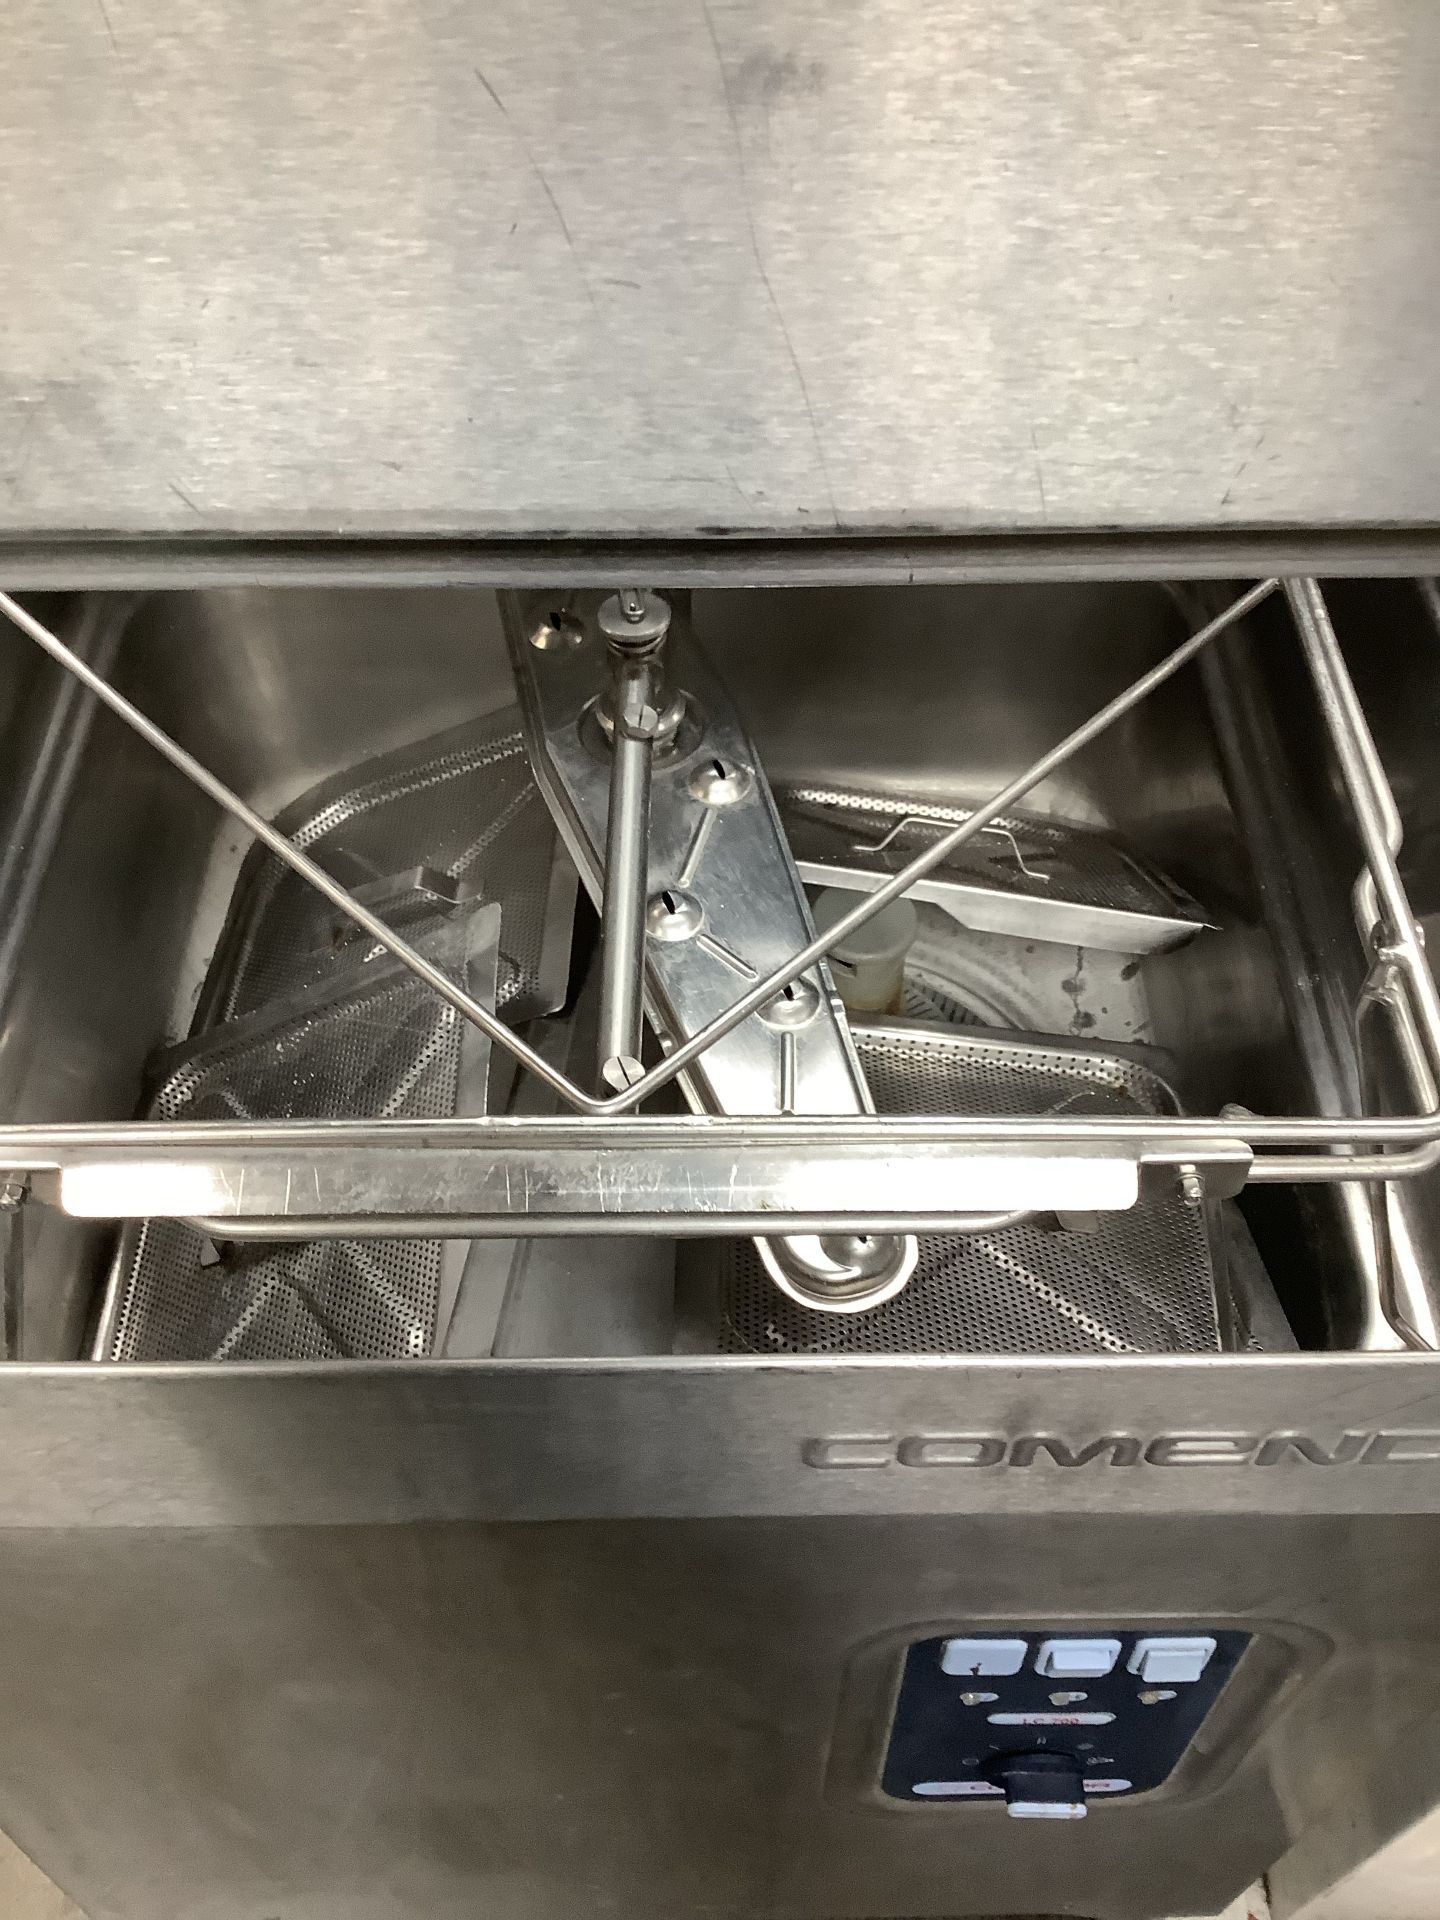 Commenda Passthrough Dishwasher - Image 2 of 2